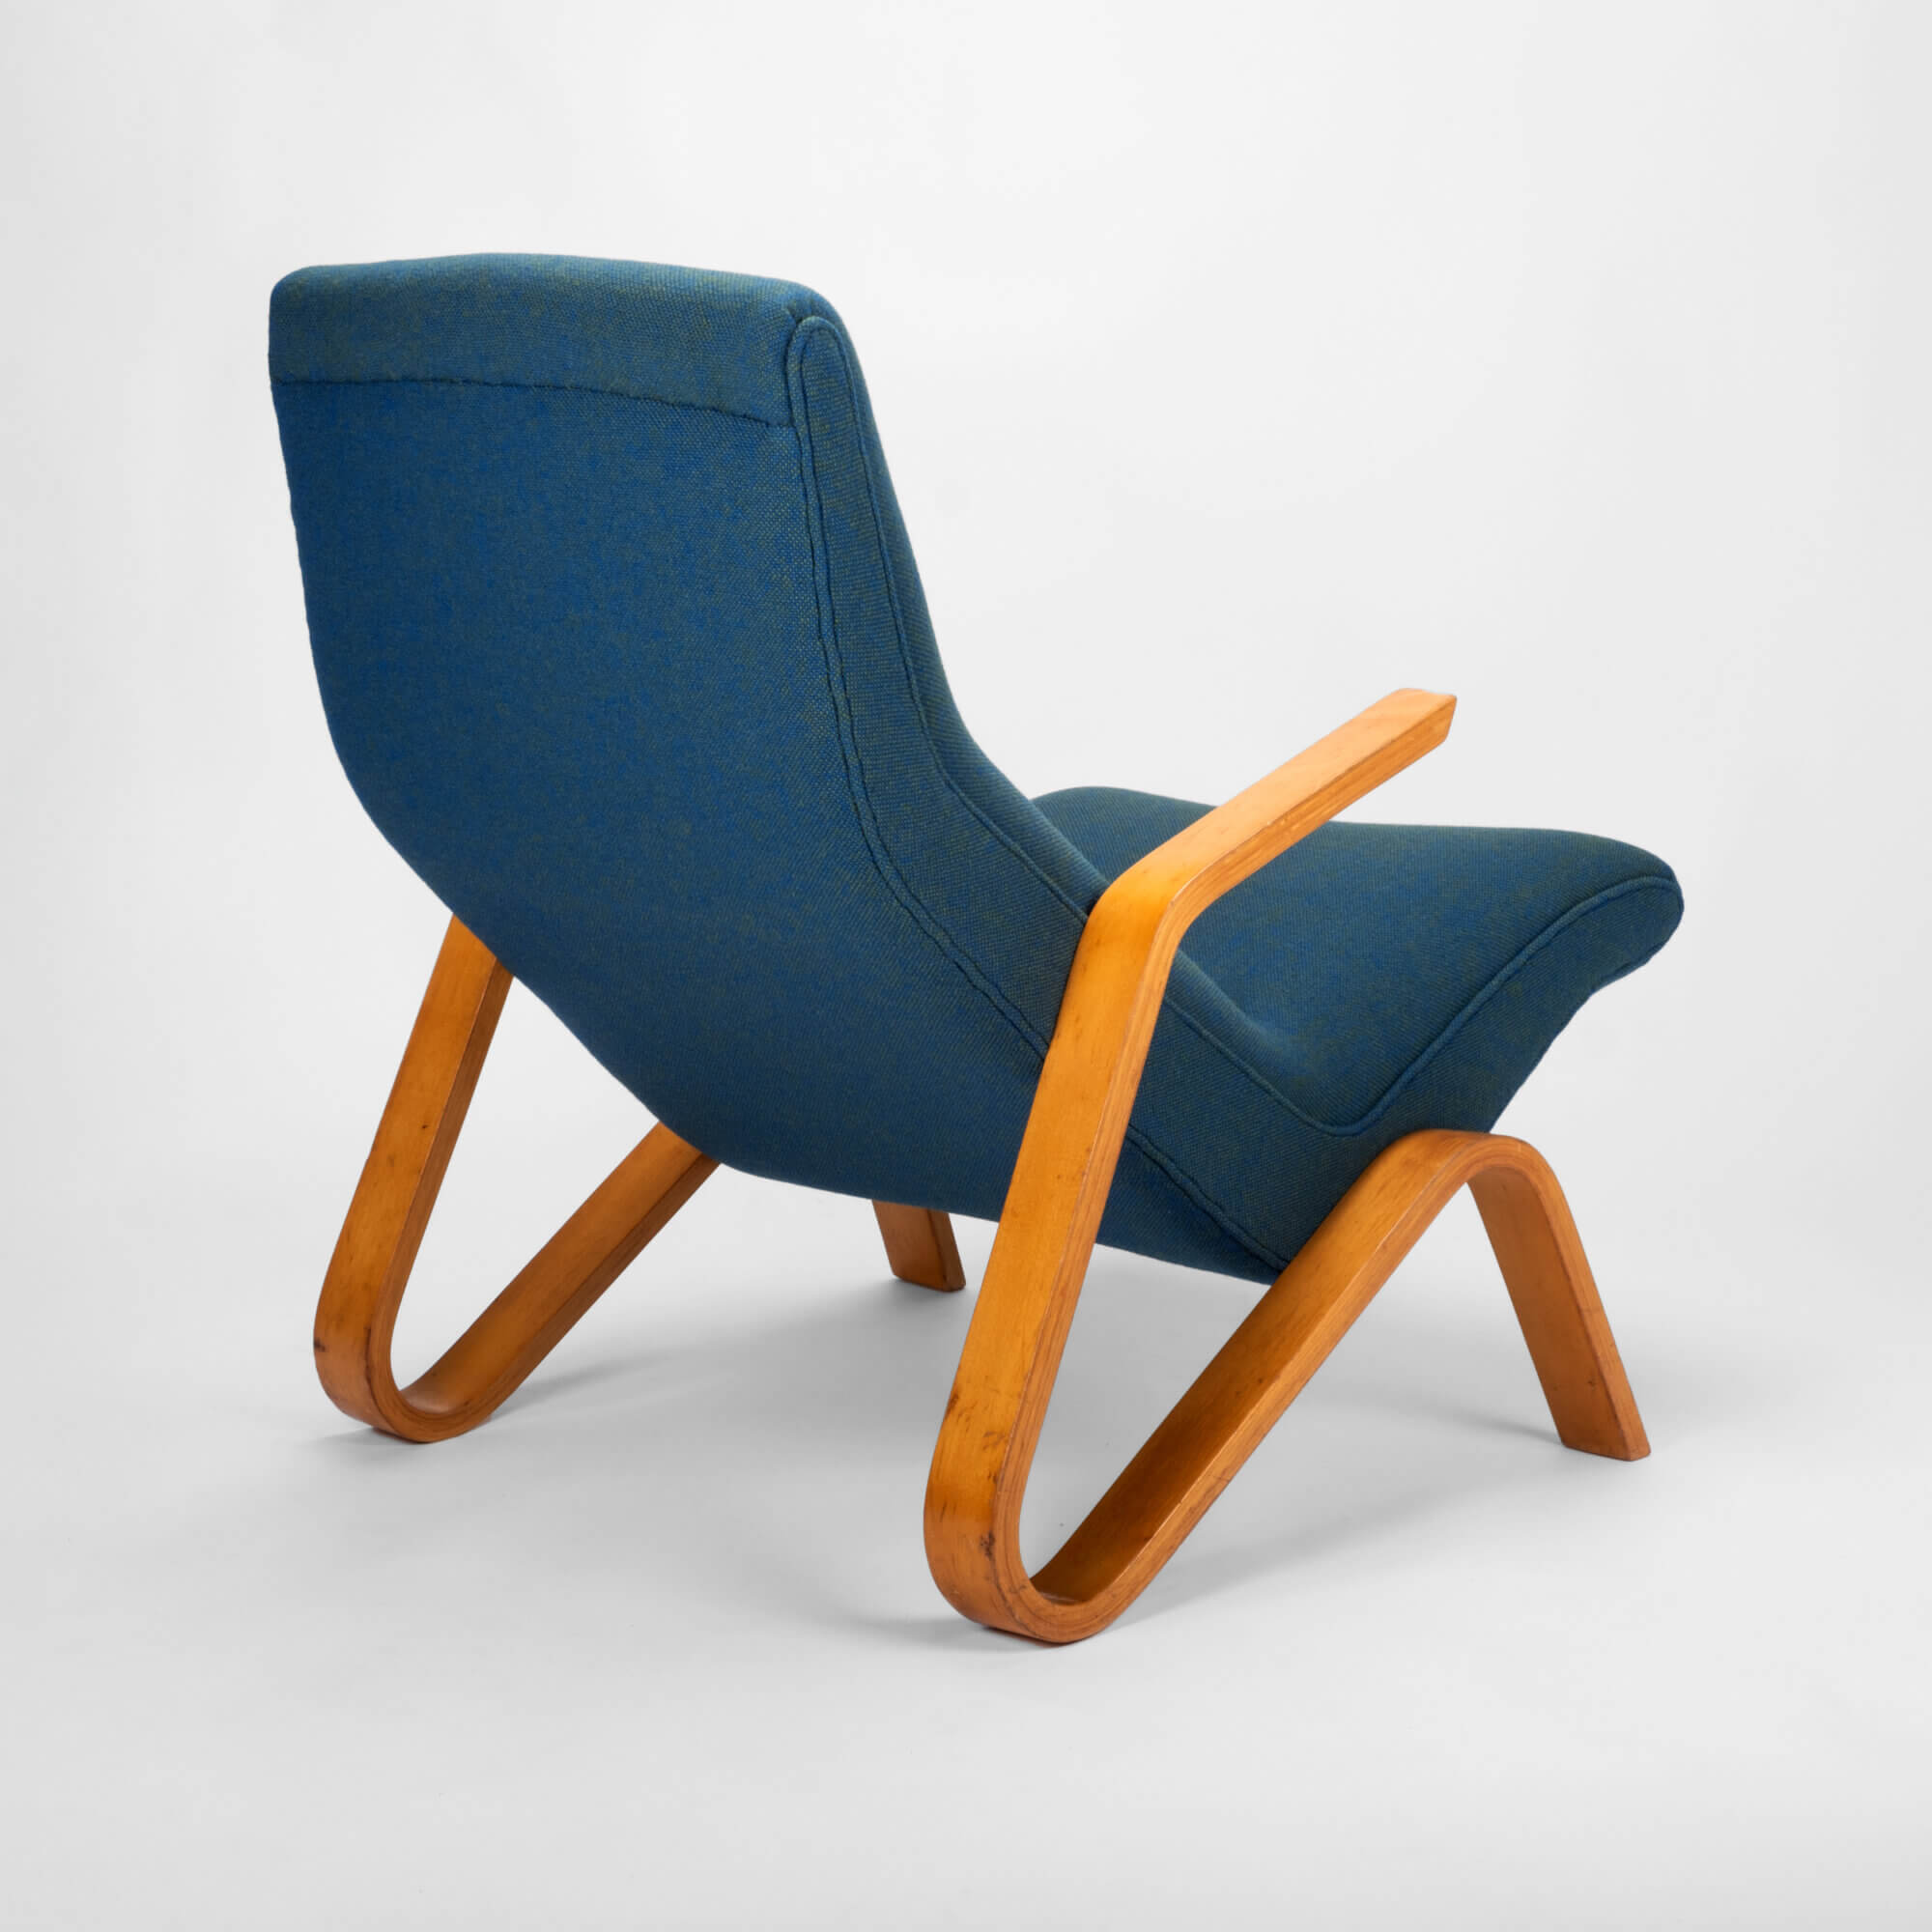 Eero Saarinen Grasshopper lounge chair shown from the backside